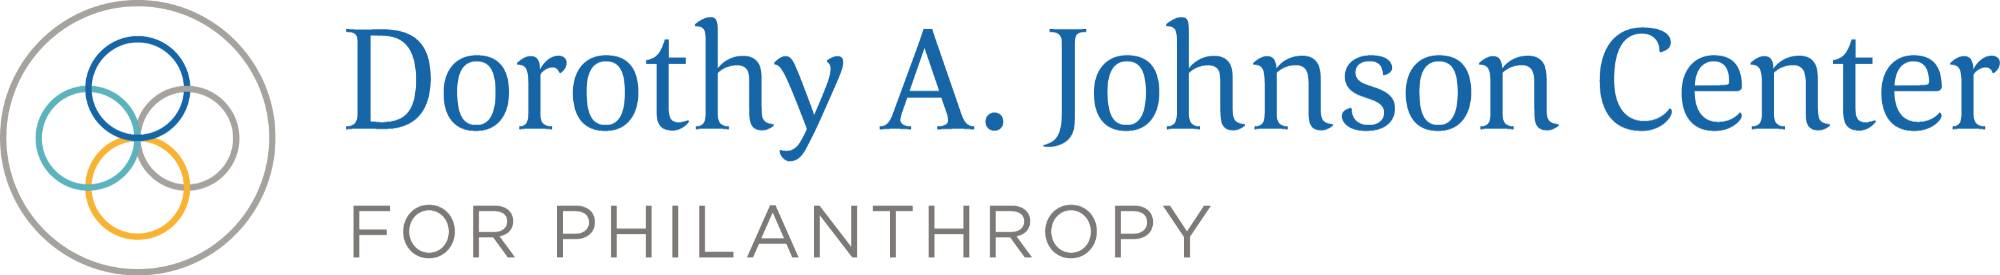 Dorothy A. Johnson Center for Philanthropy logo